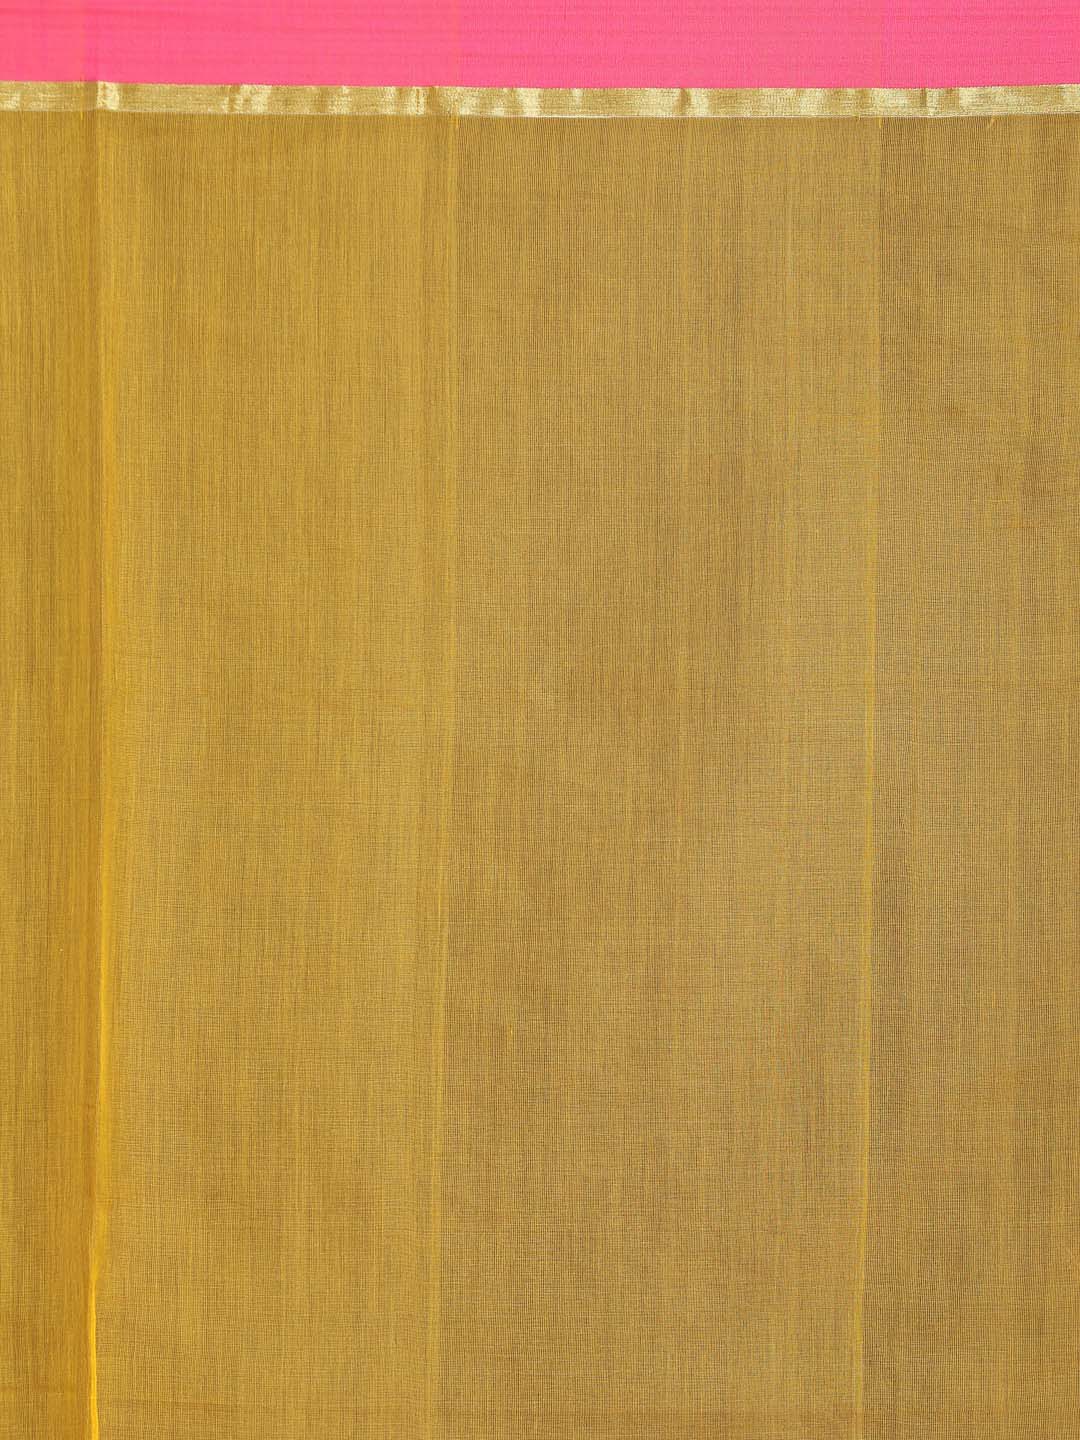 Indethnic Yellow Bengal Handloom Cotton Blend Work Saree - Saree Detail View